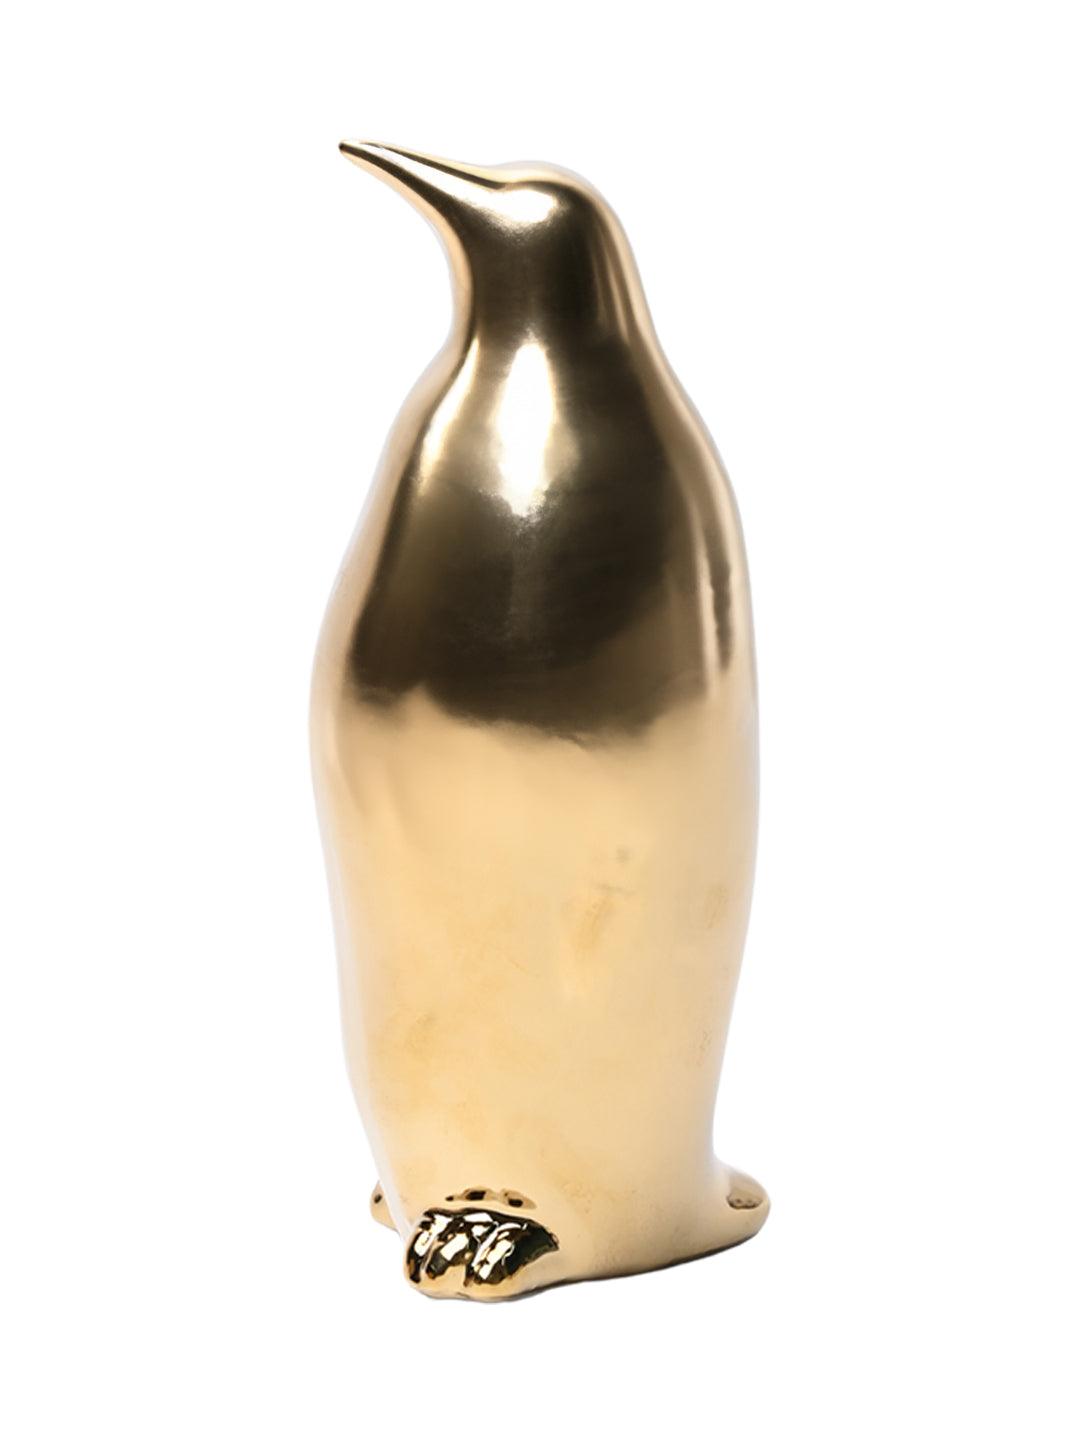 Golden Penguin Statue Figurine